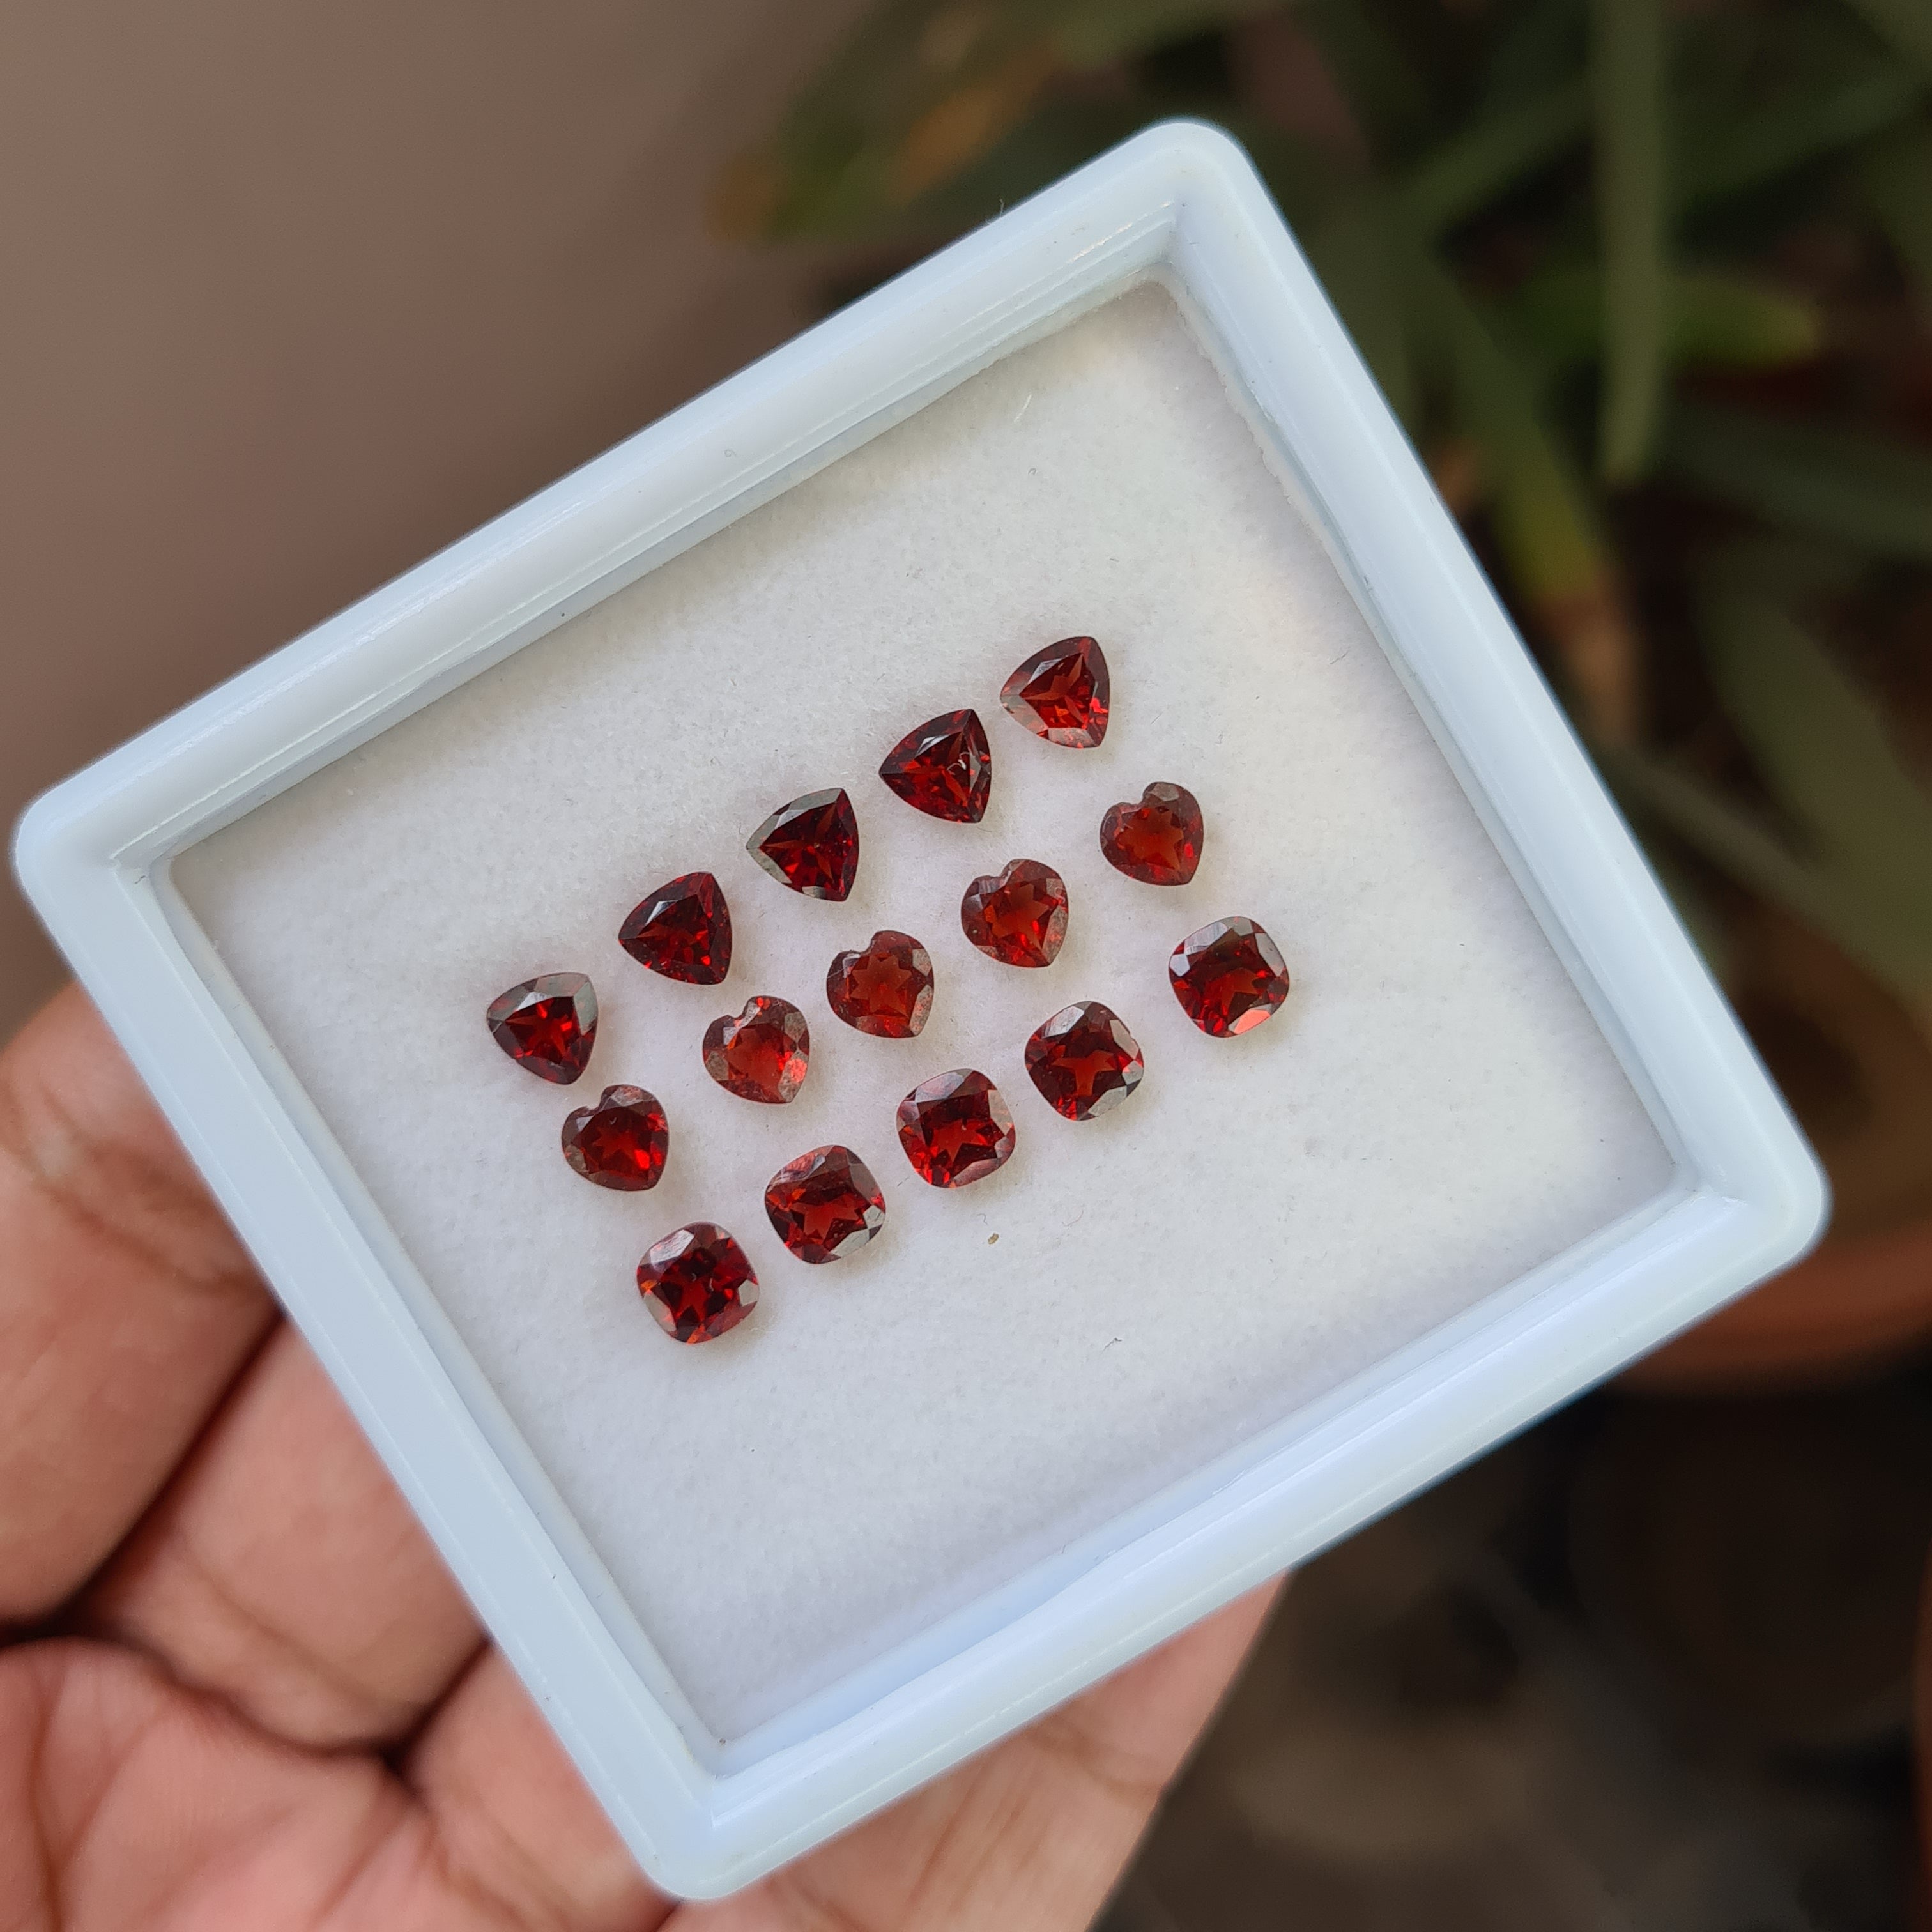 15 Pieces Natural Garnet Faceted Gemstones Mix Shape , Size: 5mm - The LabradoriteKing